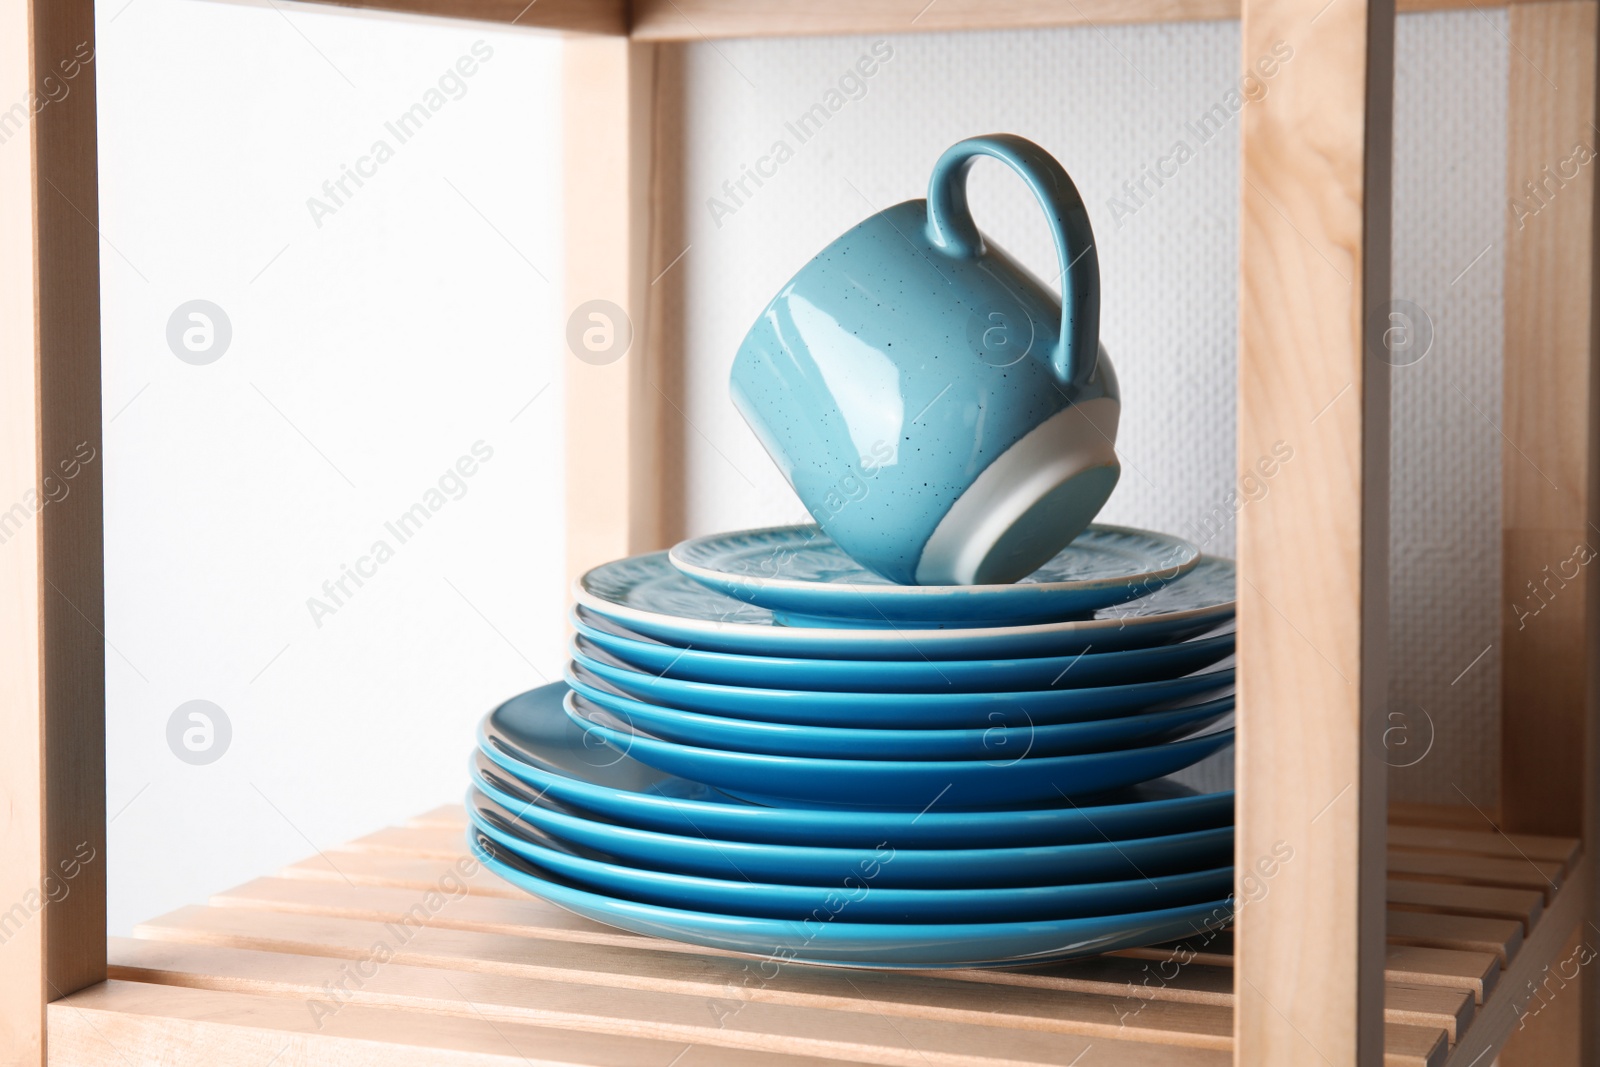 Photo of Set of dinnerware on wooden shelf against light background. Interior element